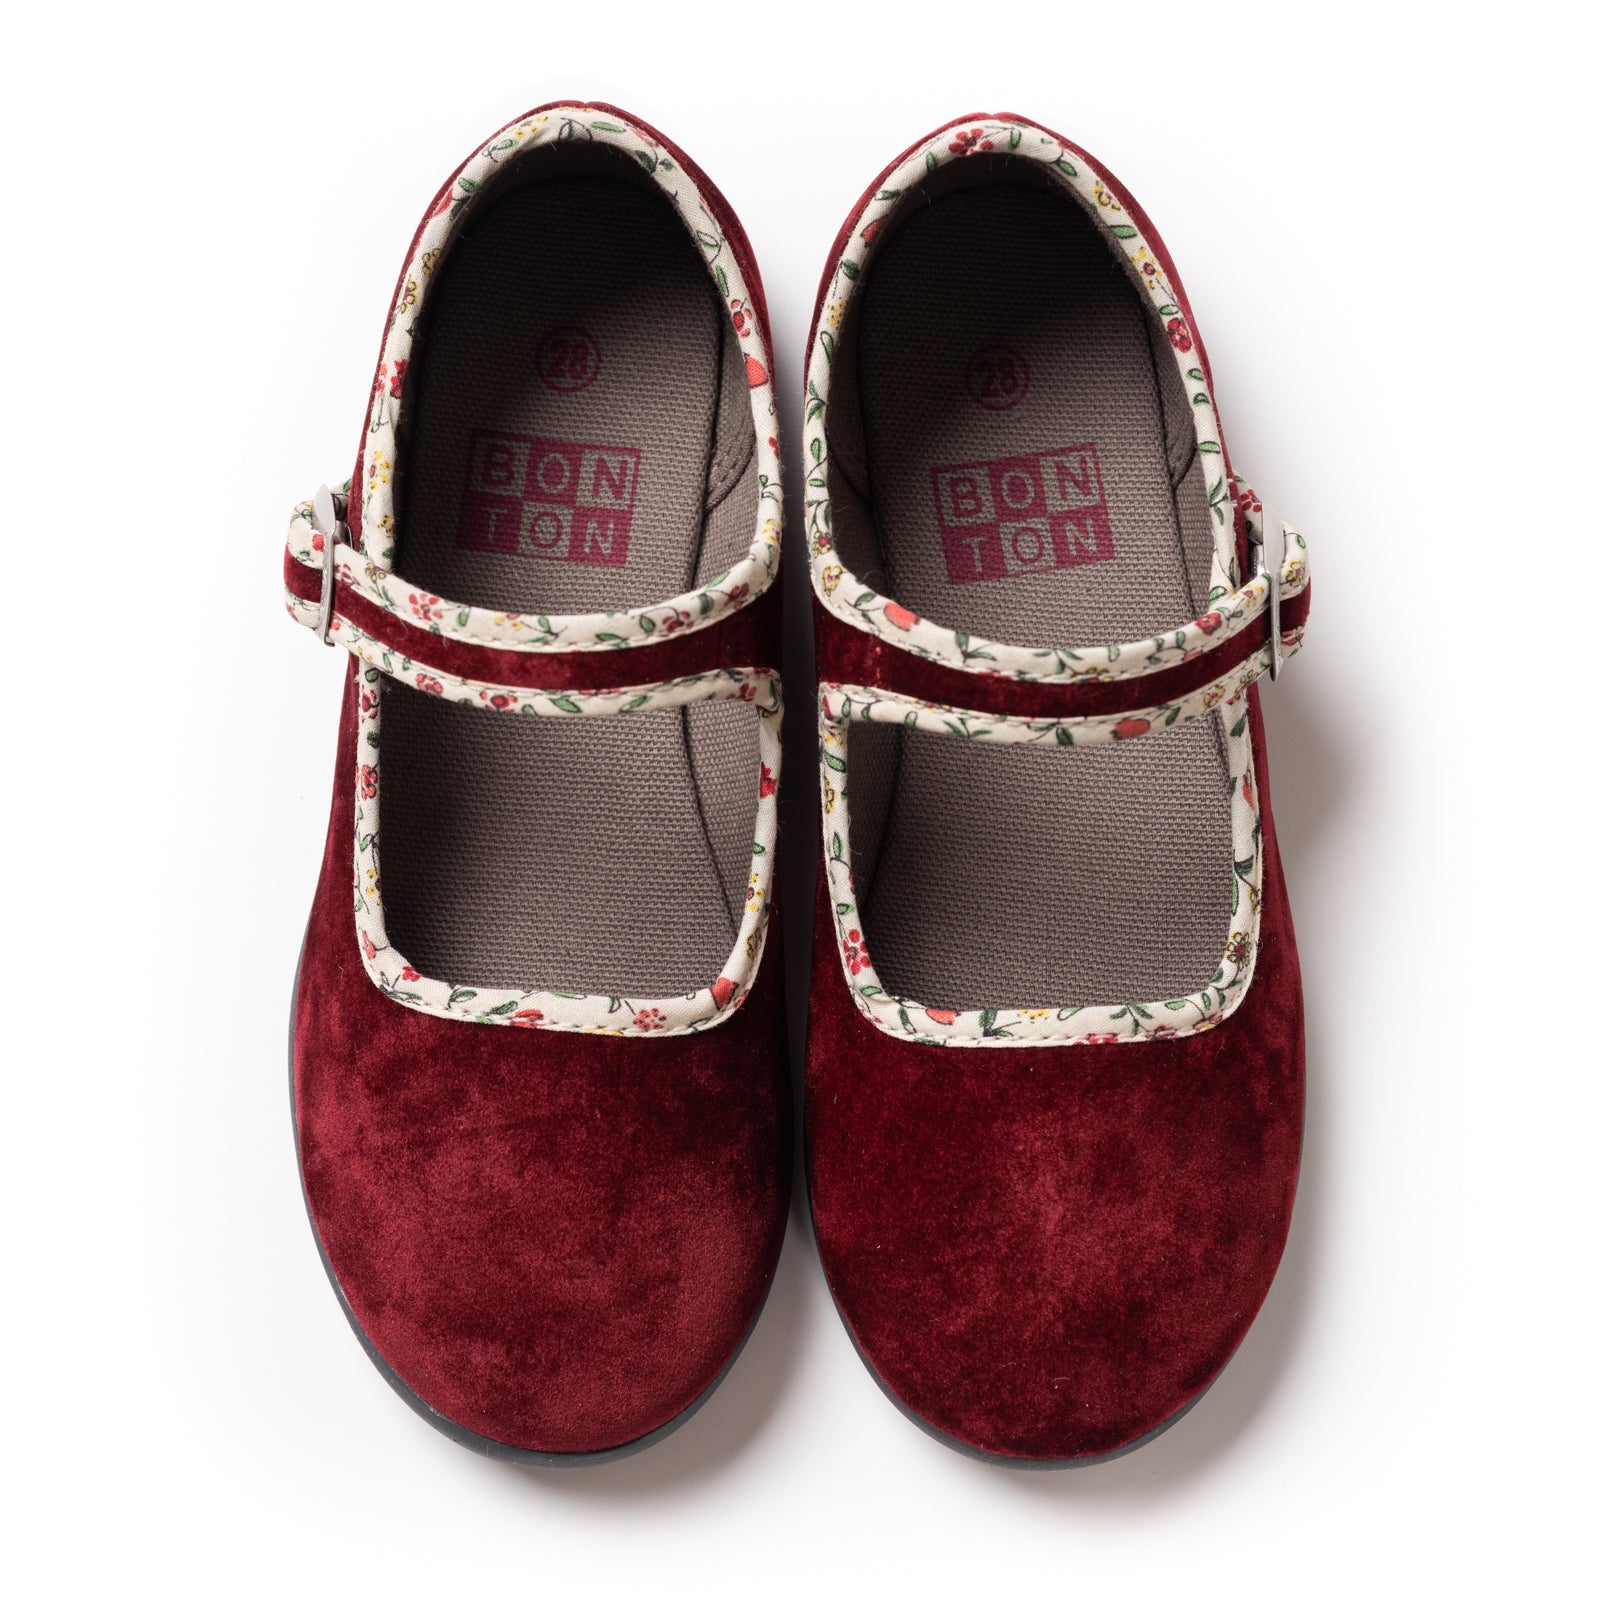 Girls Bordeaux Red Shoes